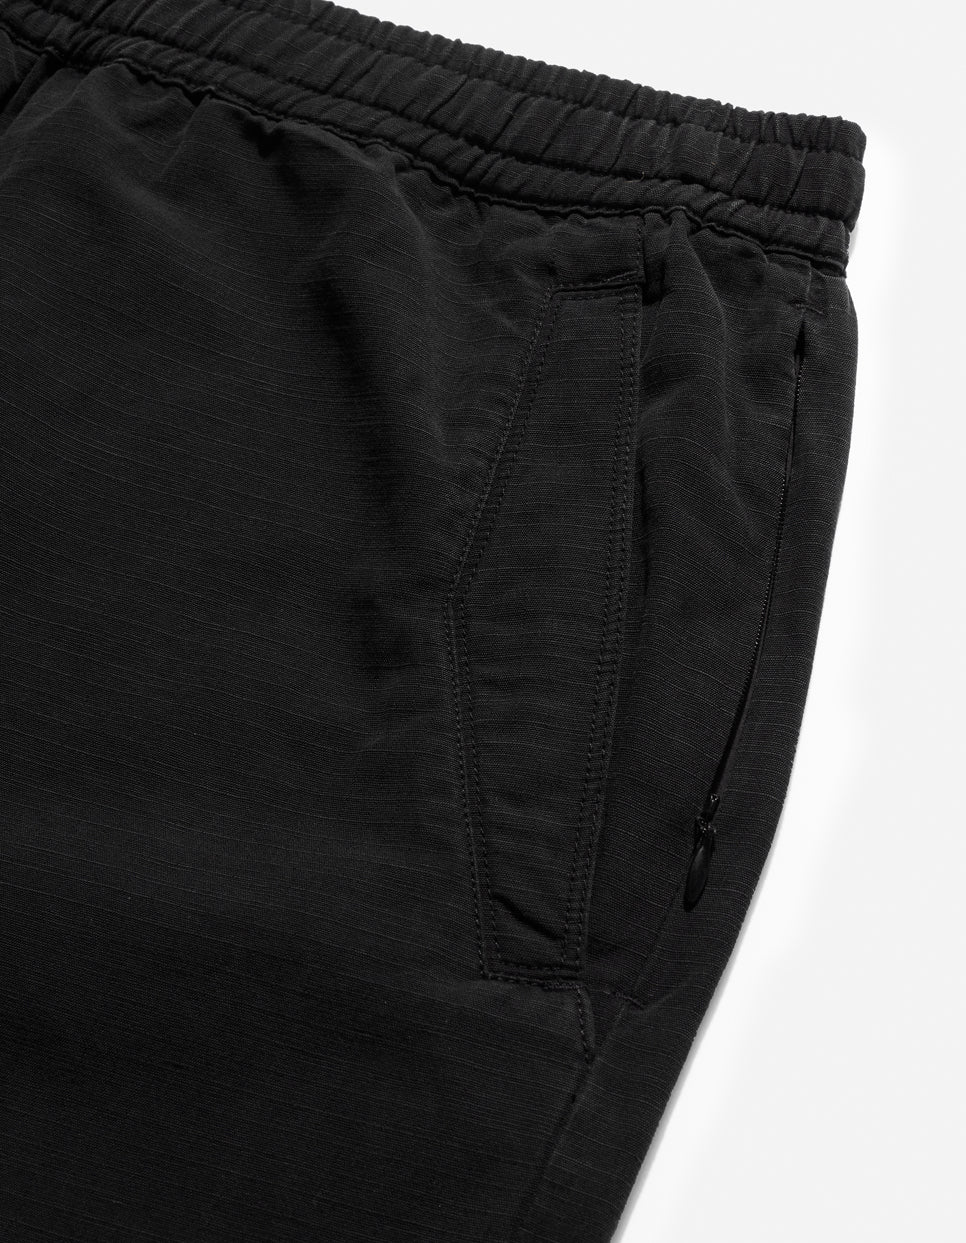 MAHARISHI 4301 Loose Asym Track Pants in Black XL